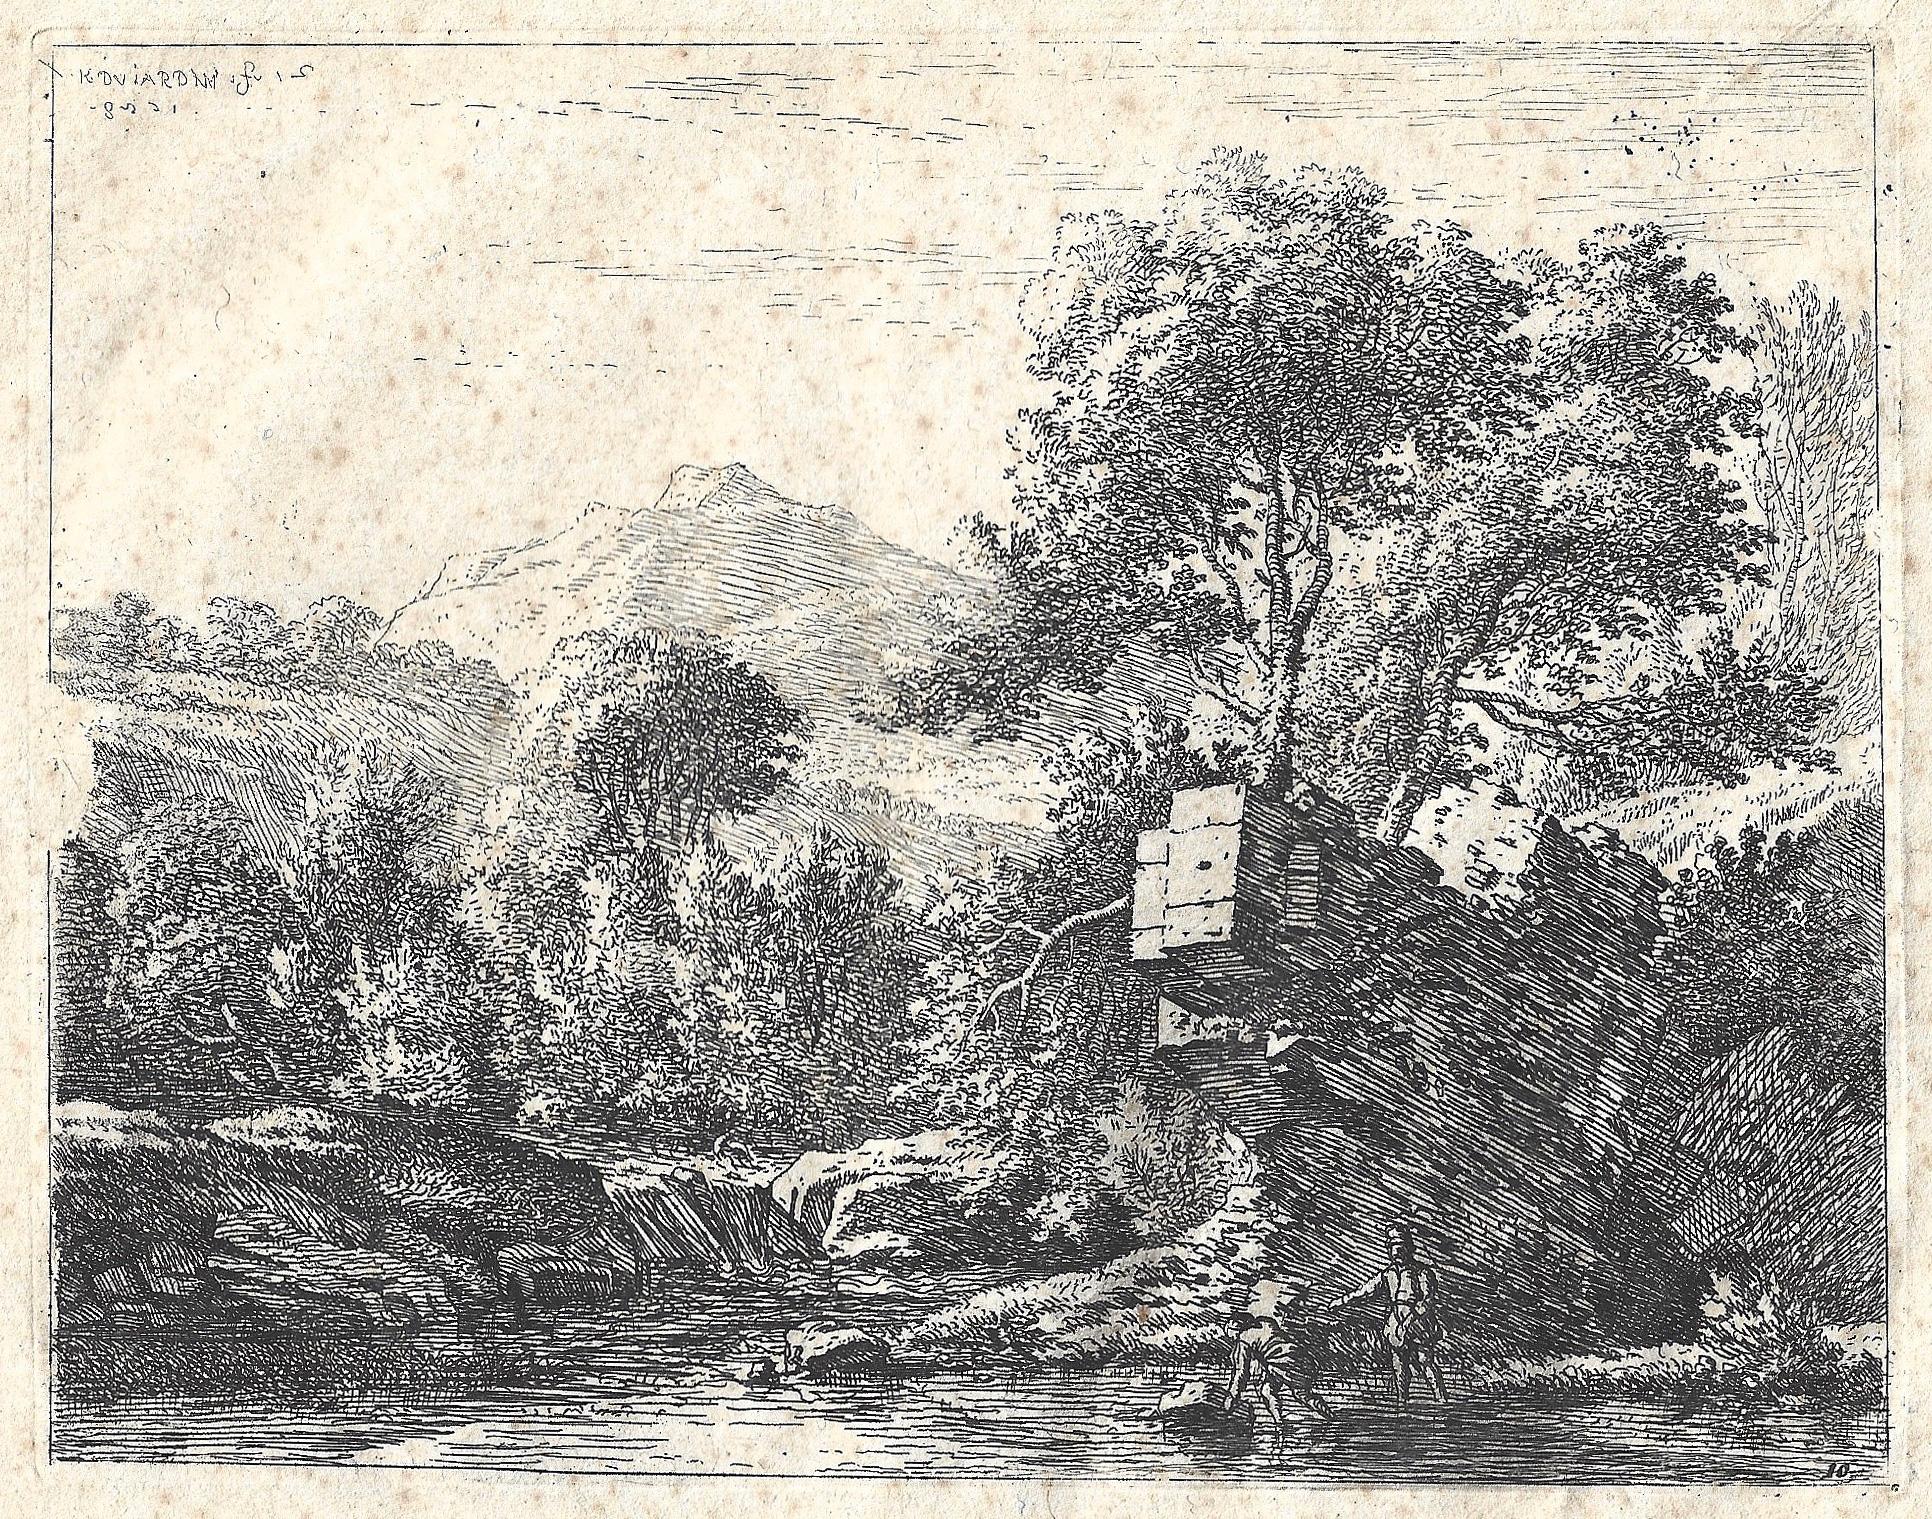 Karel Dujardin Landscape Print - Two men standing ankle-deep in a body of water, rocky outcrop ... hilltop